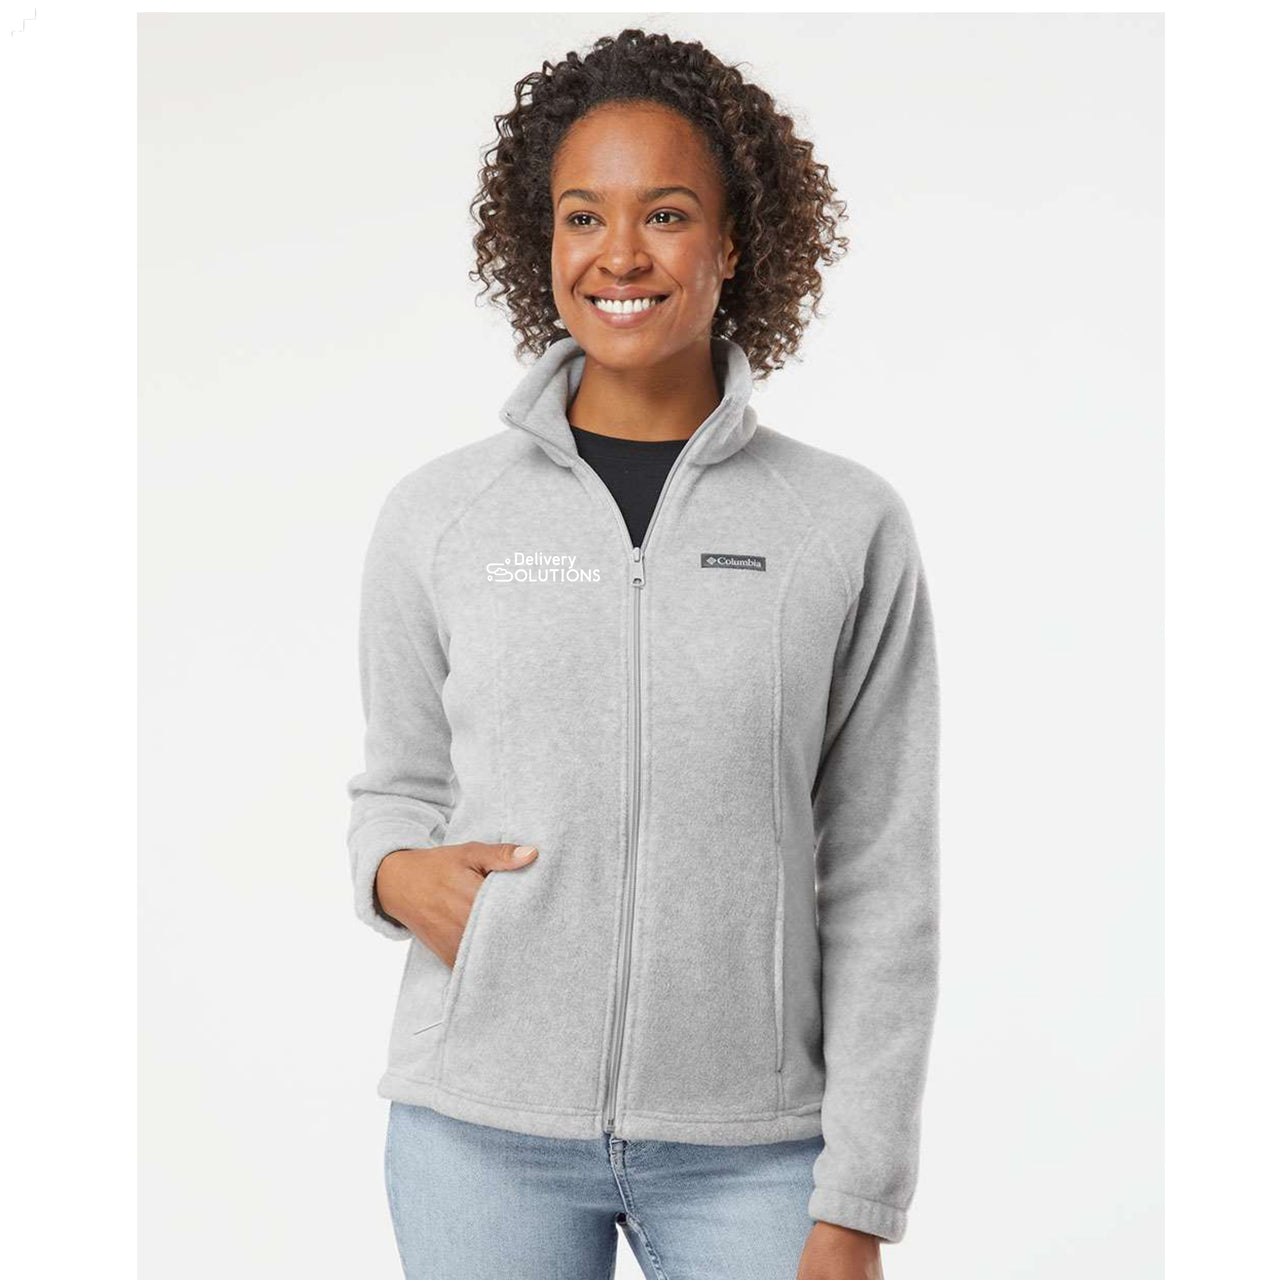 Ladies - Port Authority® Value Fleece Jacket- (Dental Connections)